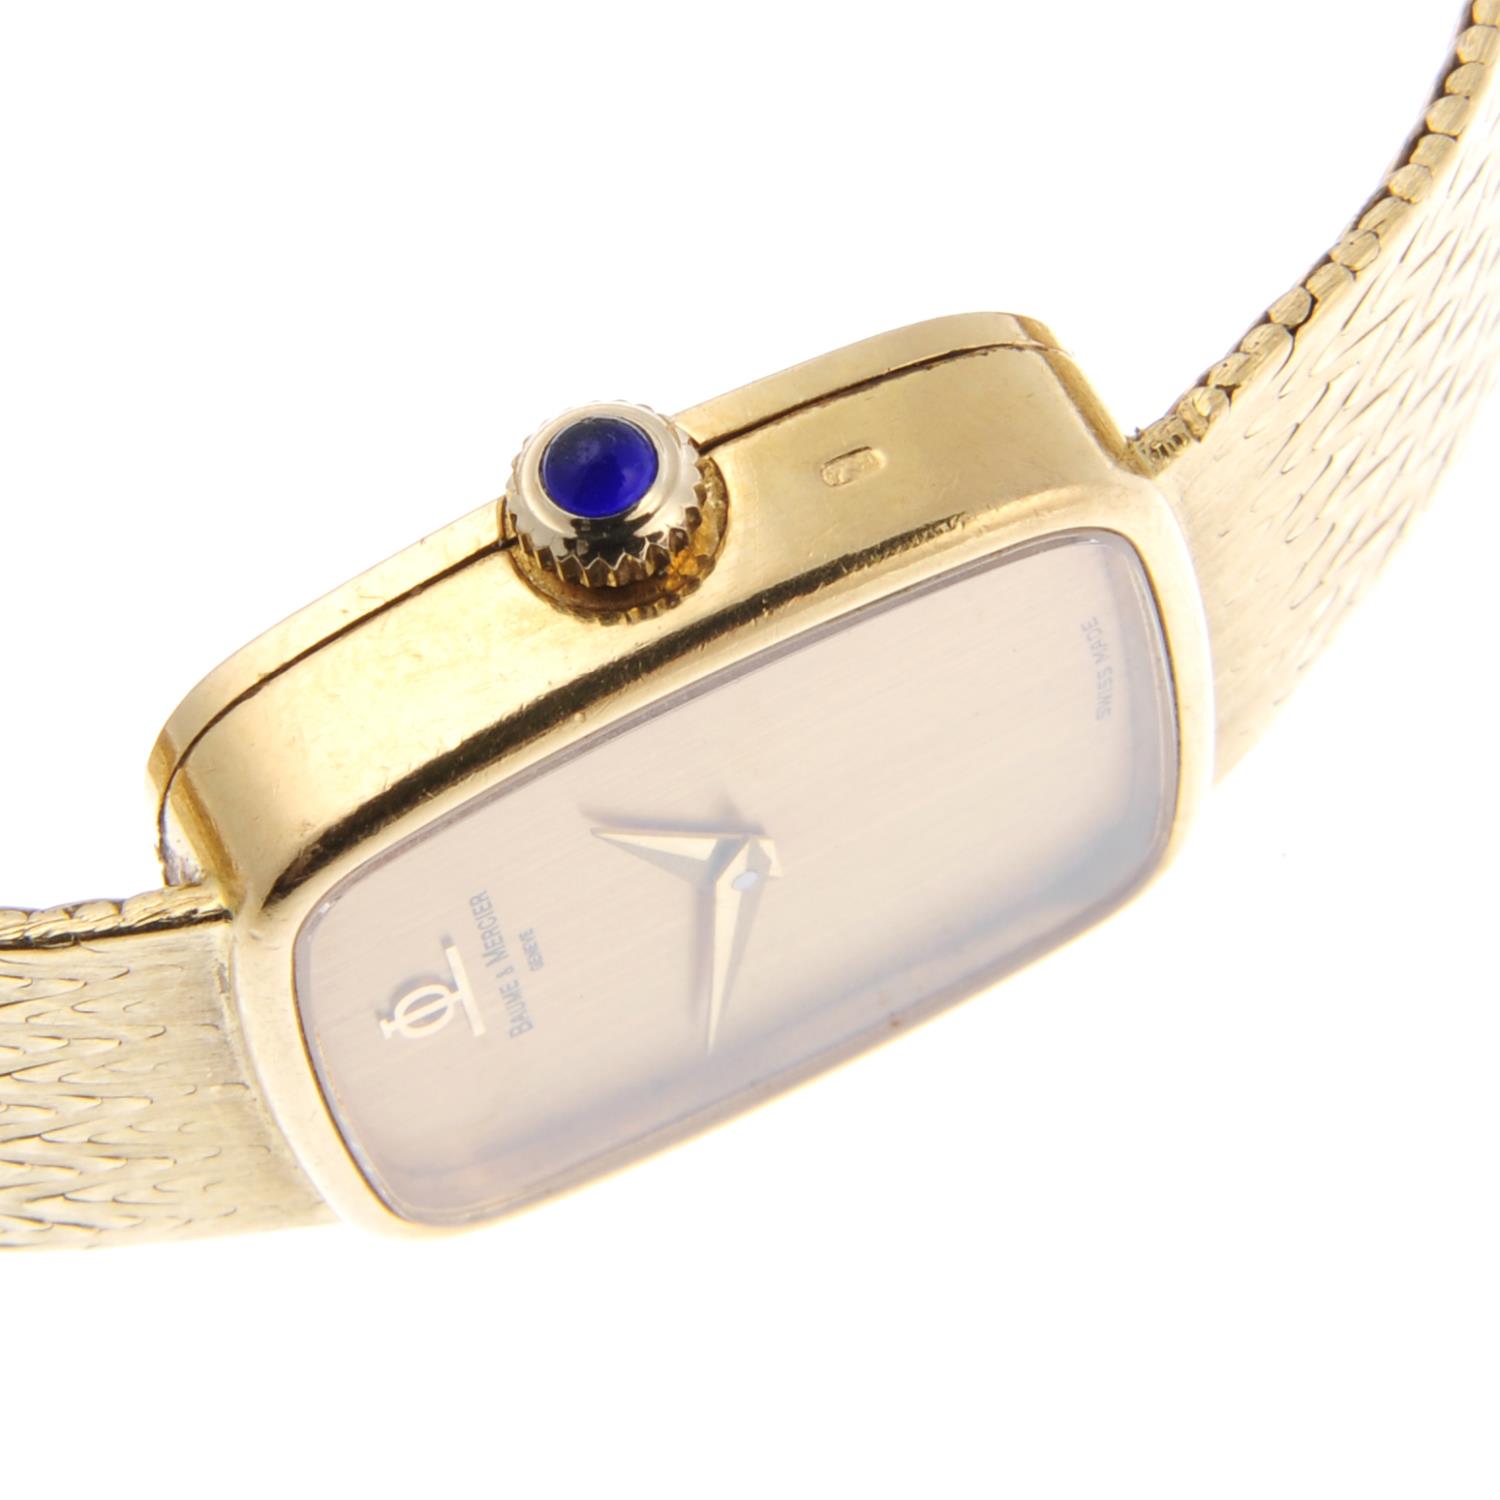 BAUME & MERCIER - a lady's bracelet watch. - Image 3 of 4